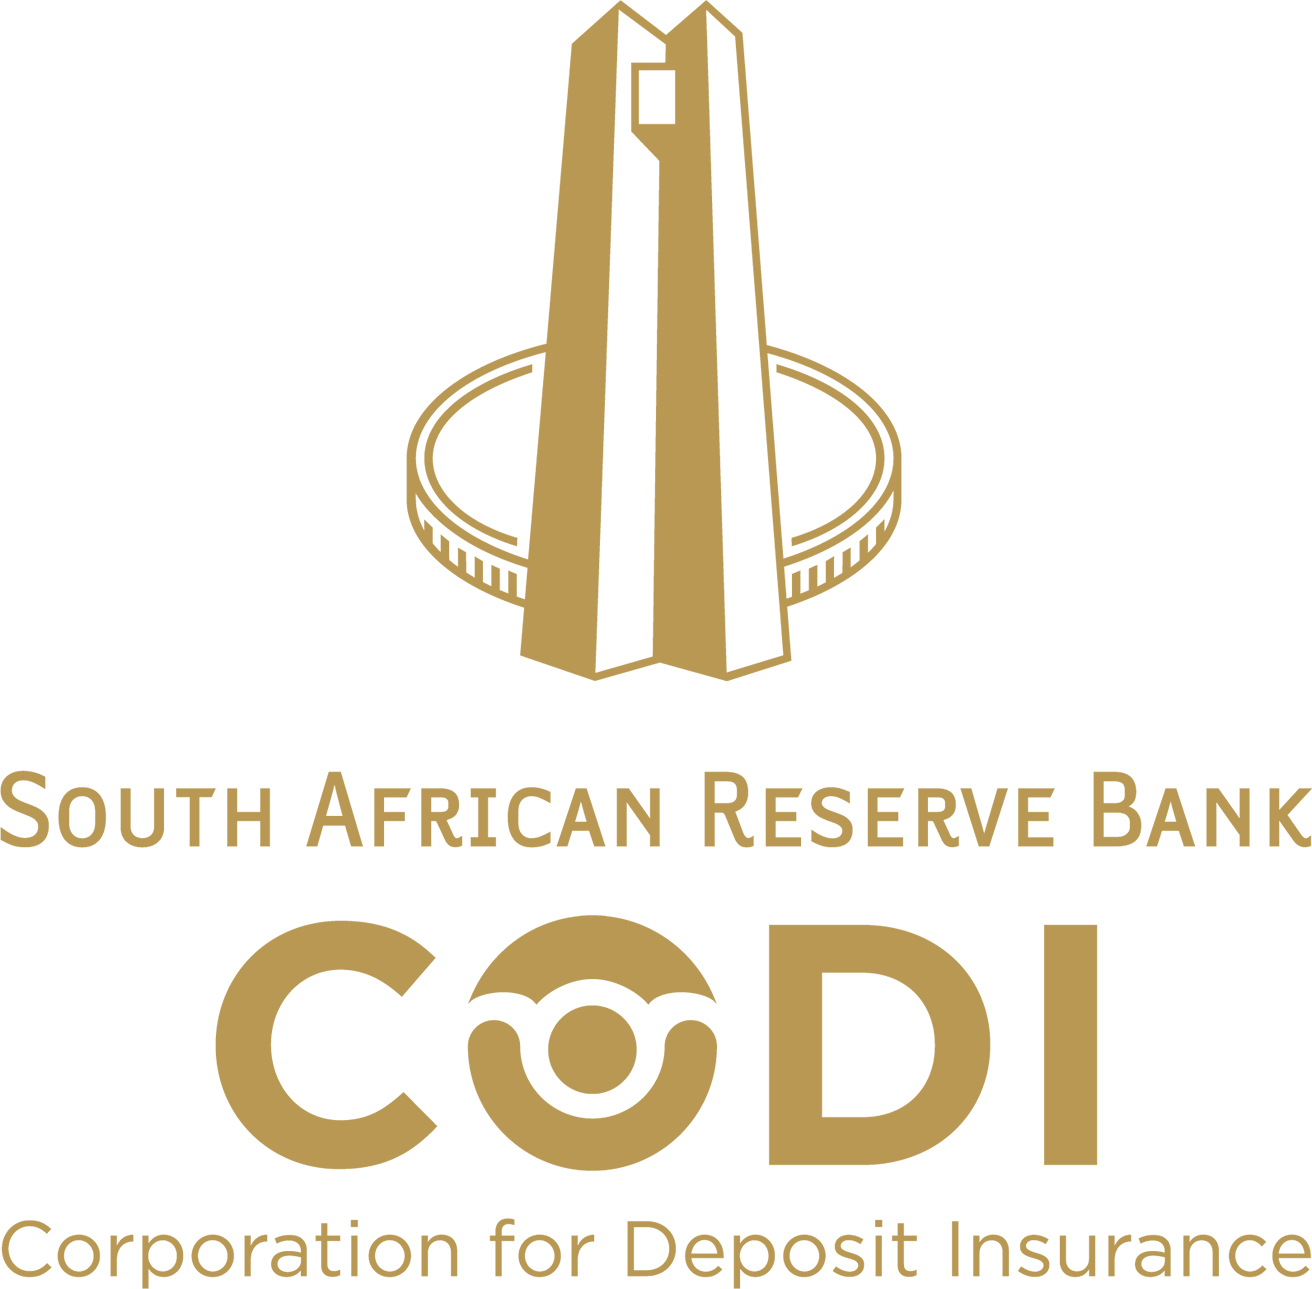 CODI logo